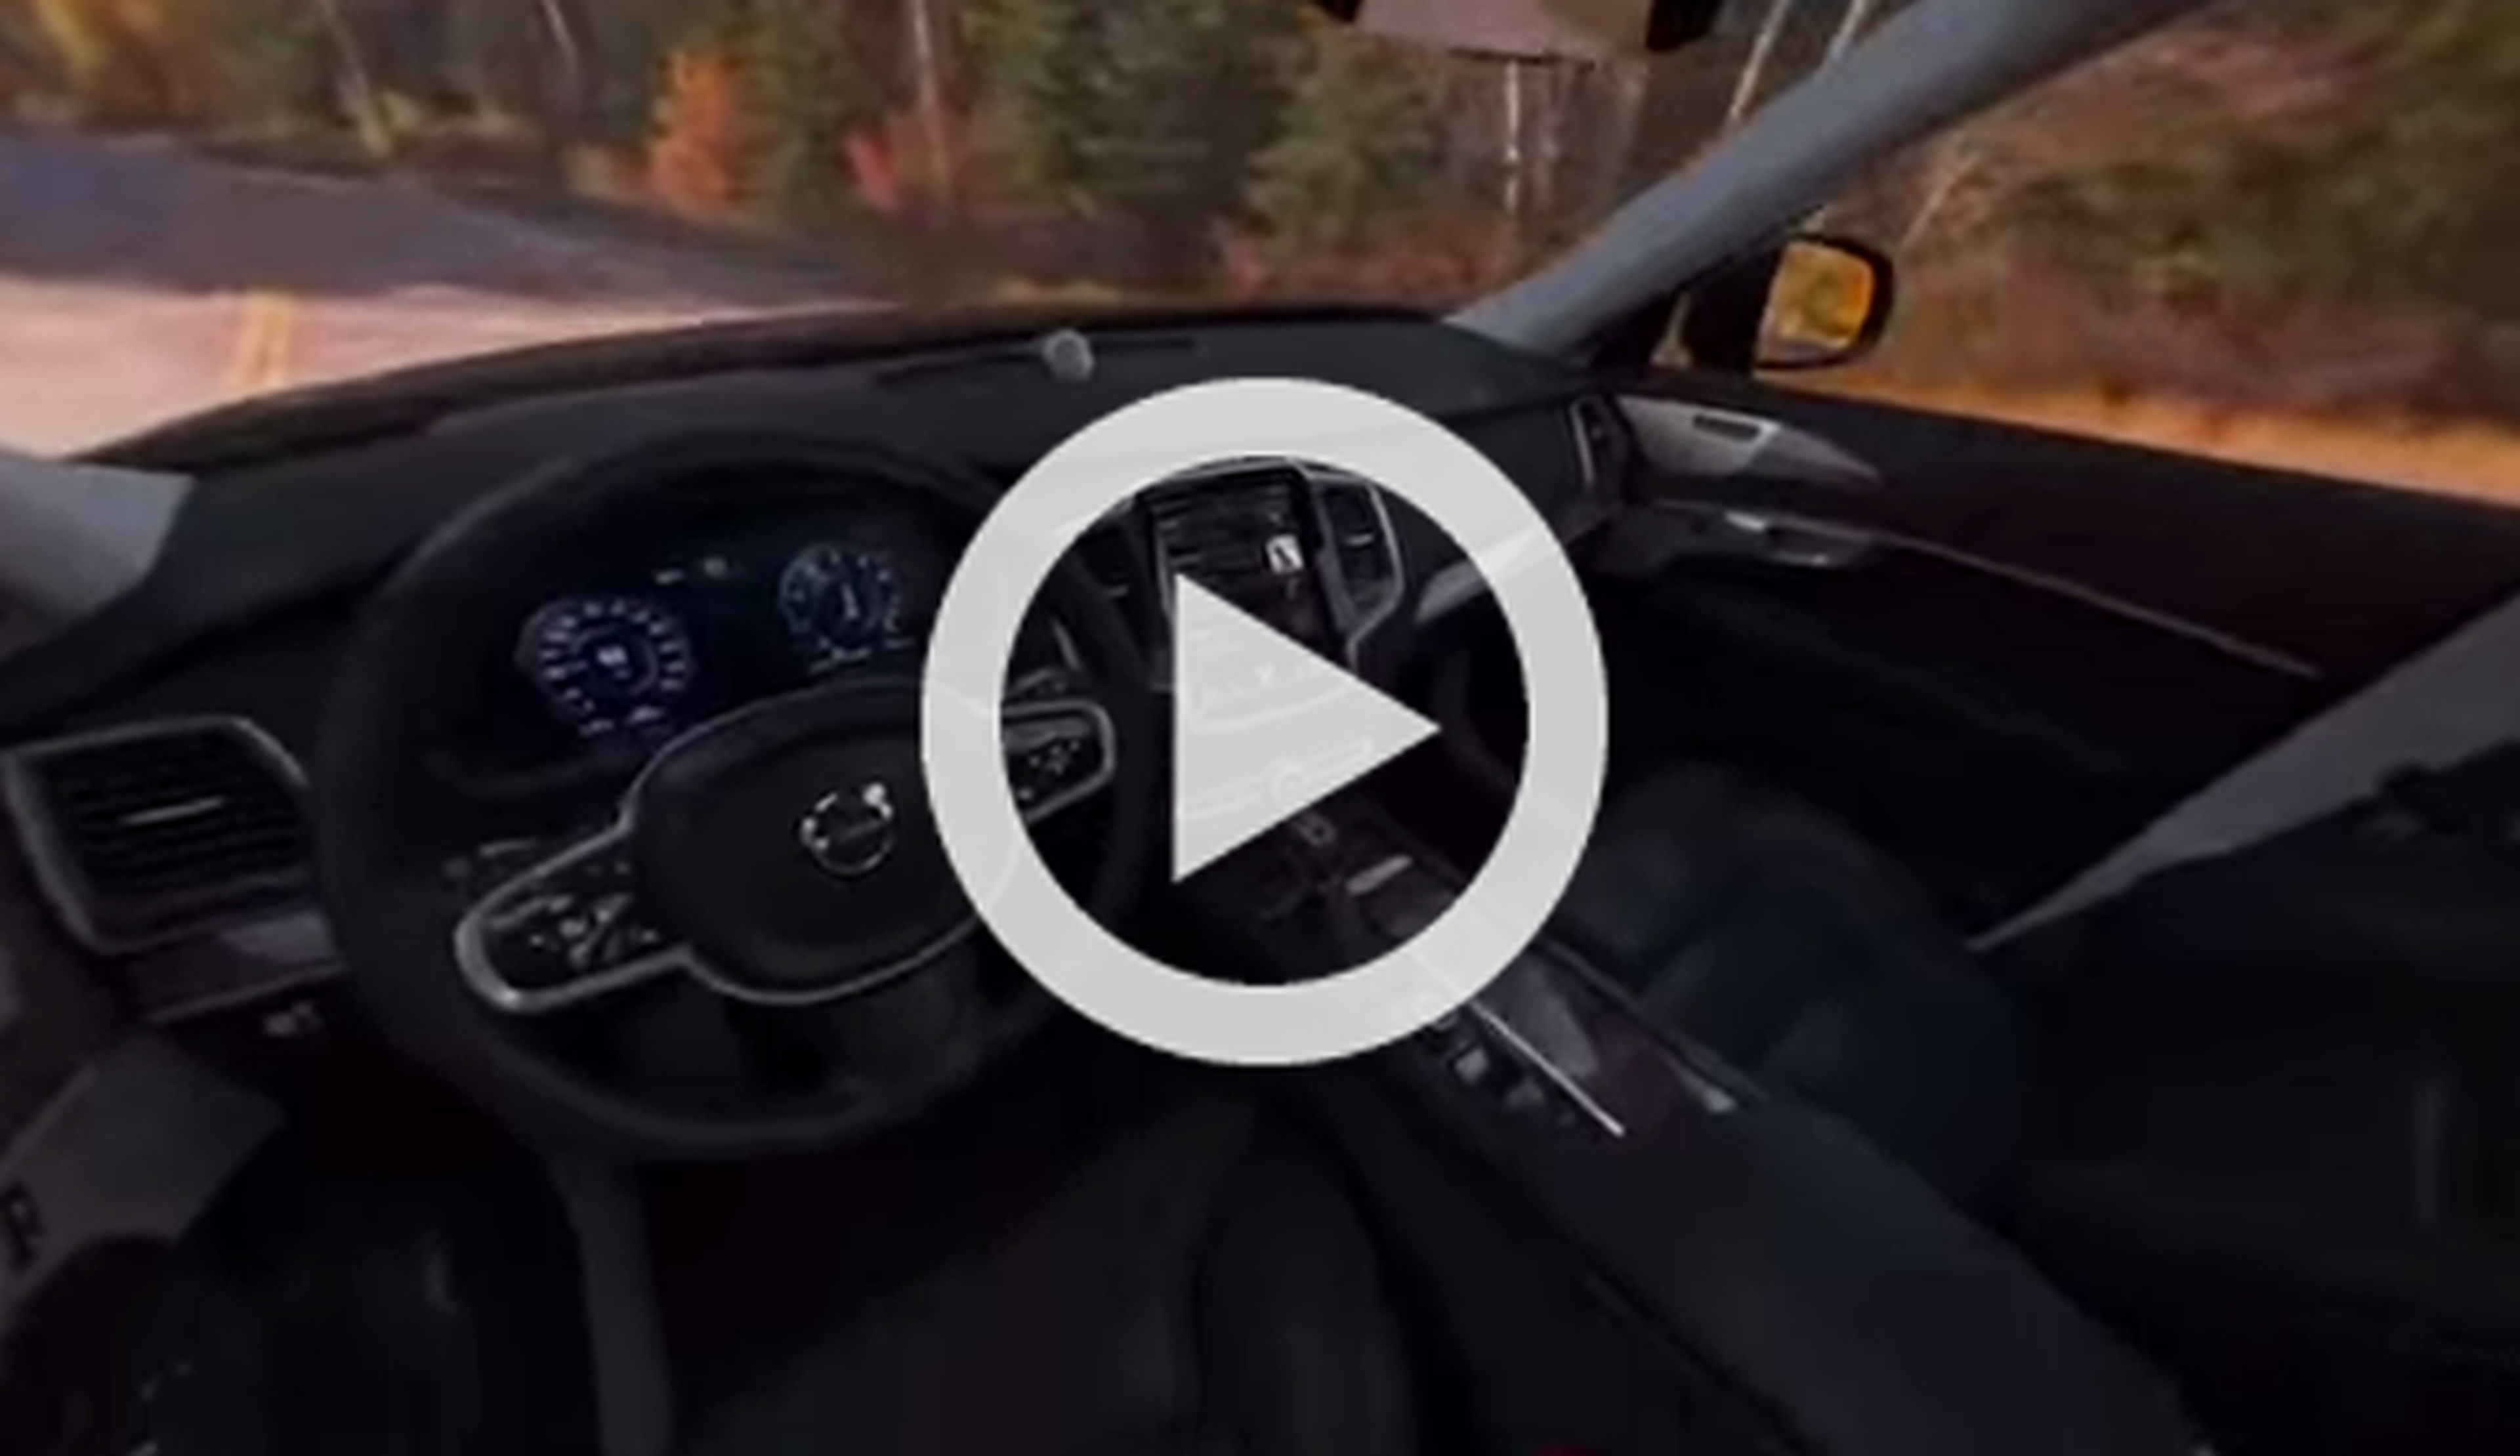 Paseo virtual en un Volvo XC90 gracias a Google Cardboard